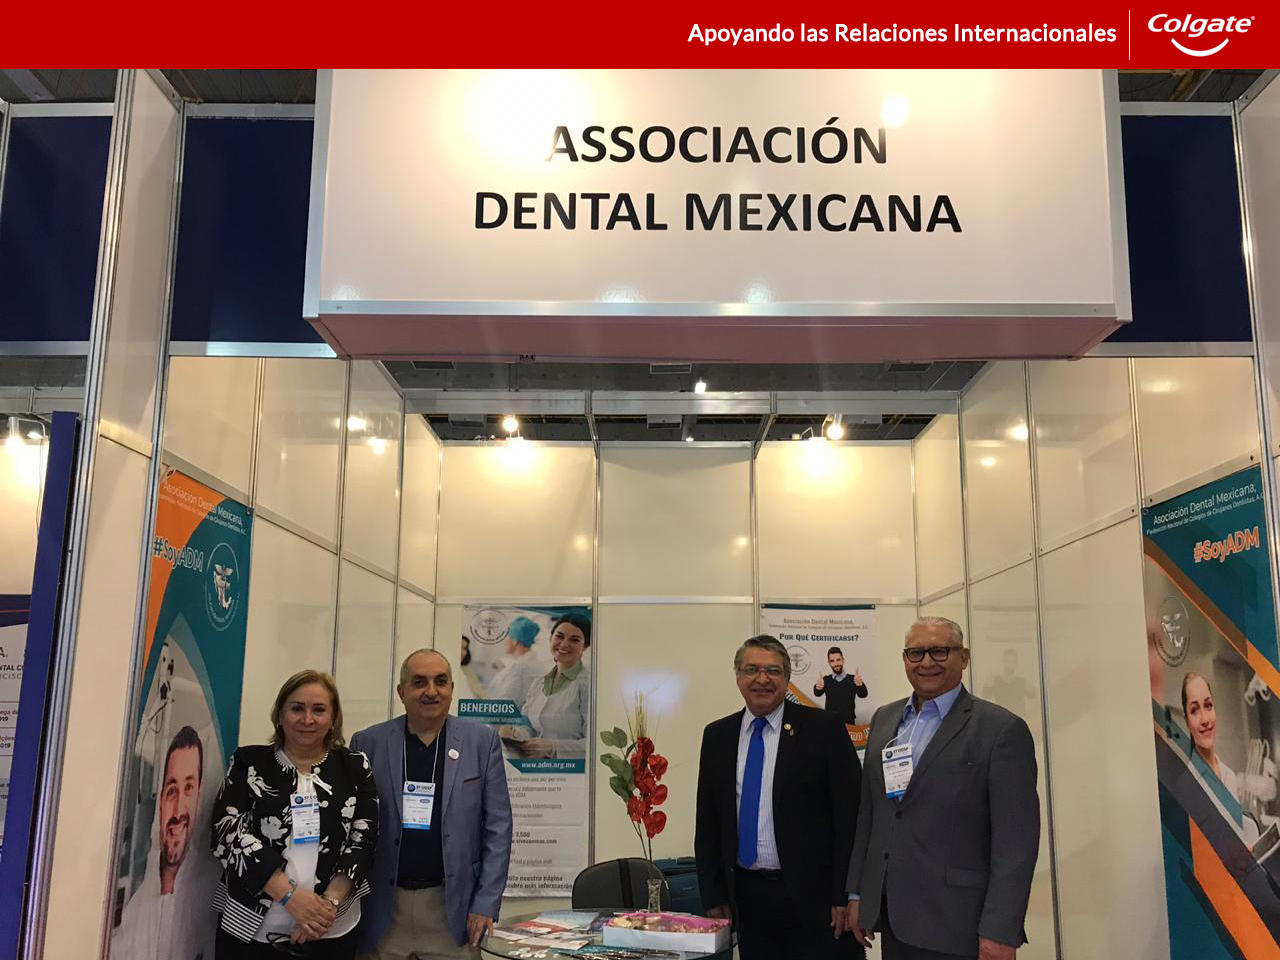 37º Congreso Internacional de Odontología Sao Paulo, Brasil